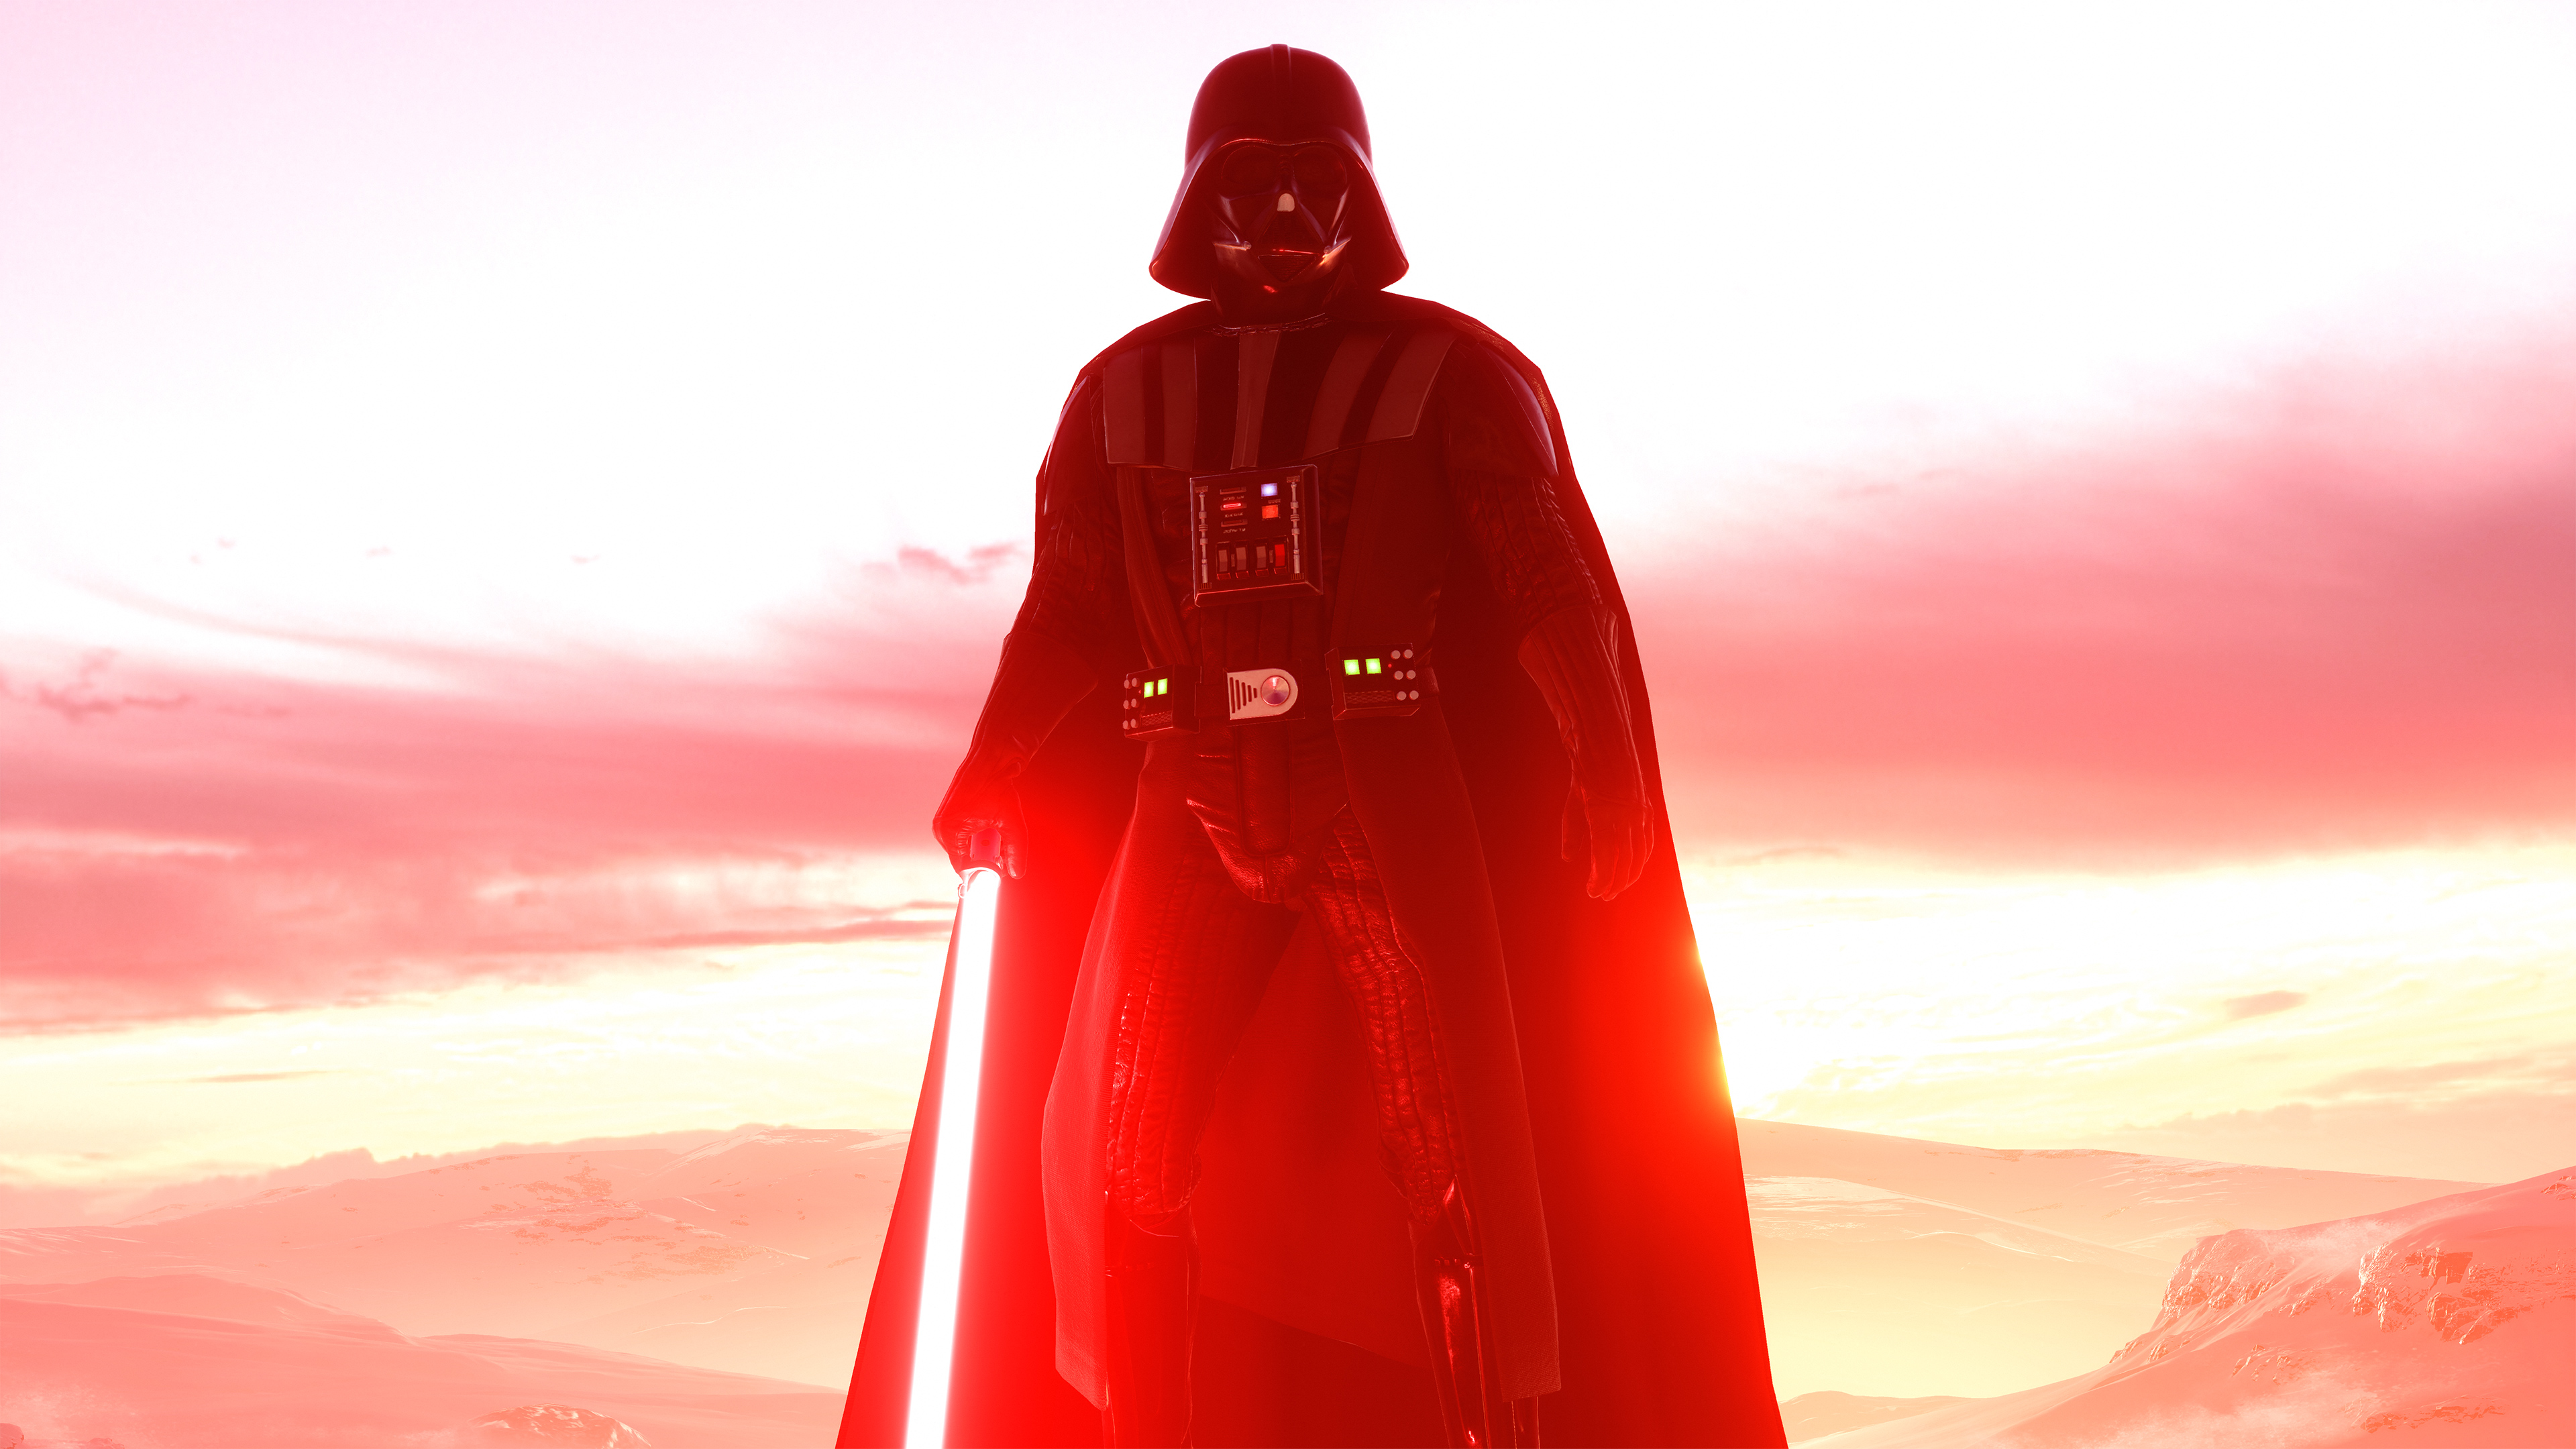 Wallpaper Darth Vader, Star Wars Battlefront Ii, Star Wars, Red, Outerwear, Background Free Image